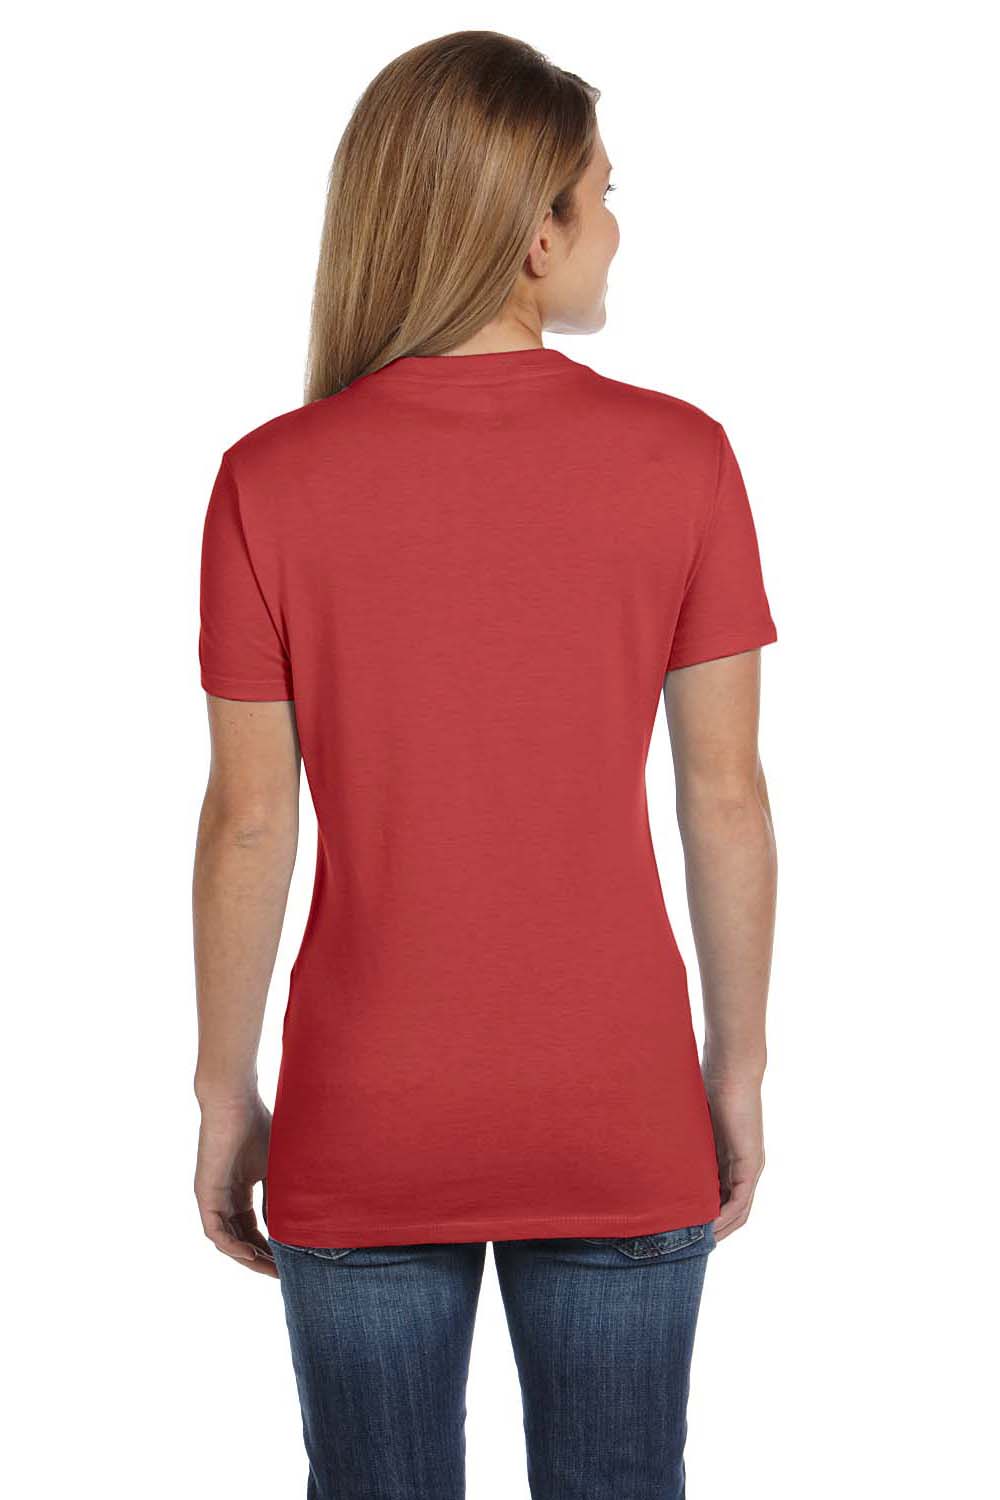 Hanes S04V Womens Nano-T Short Sleeve V-Neck T-Shirt Vintage Red Back